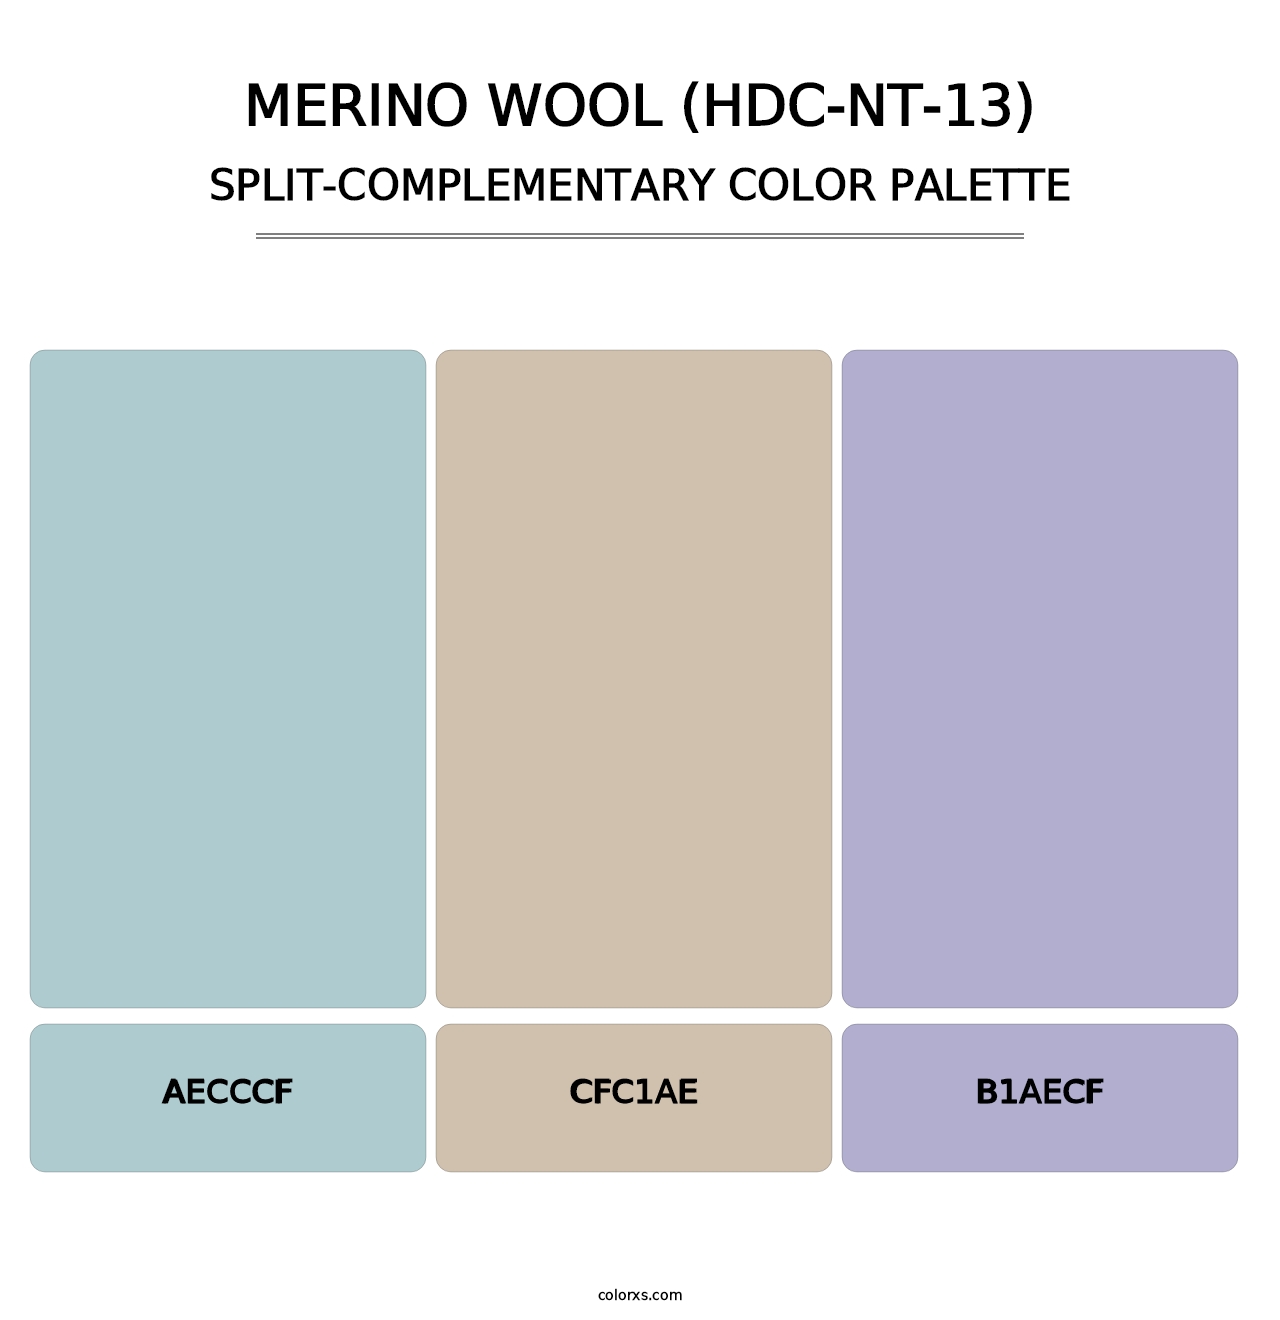 Merino Wool (HDC-NT-13) - Split-Complementary Color Palette